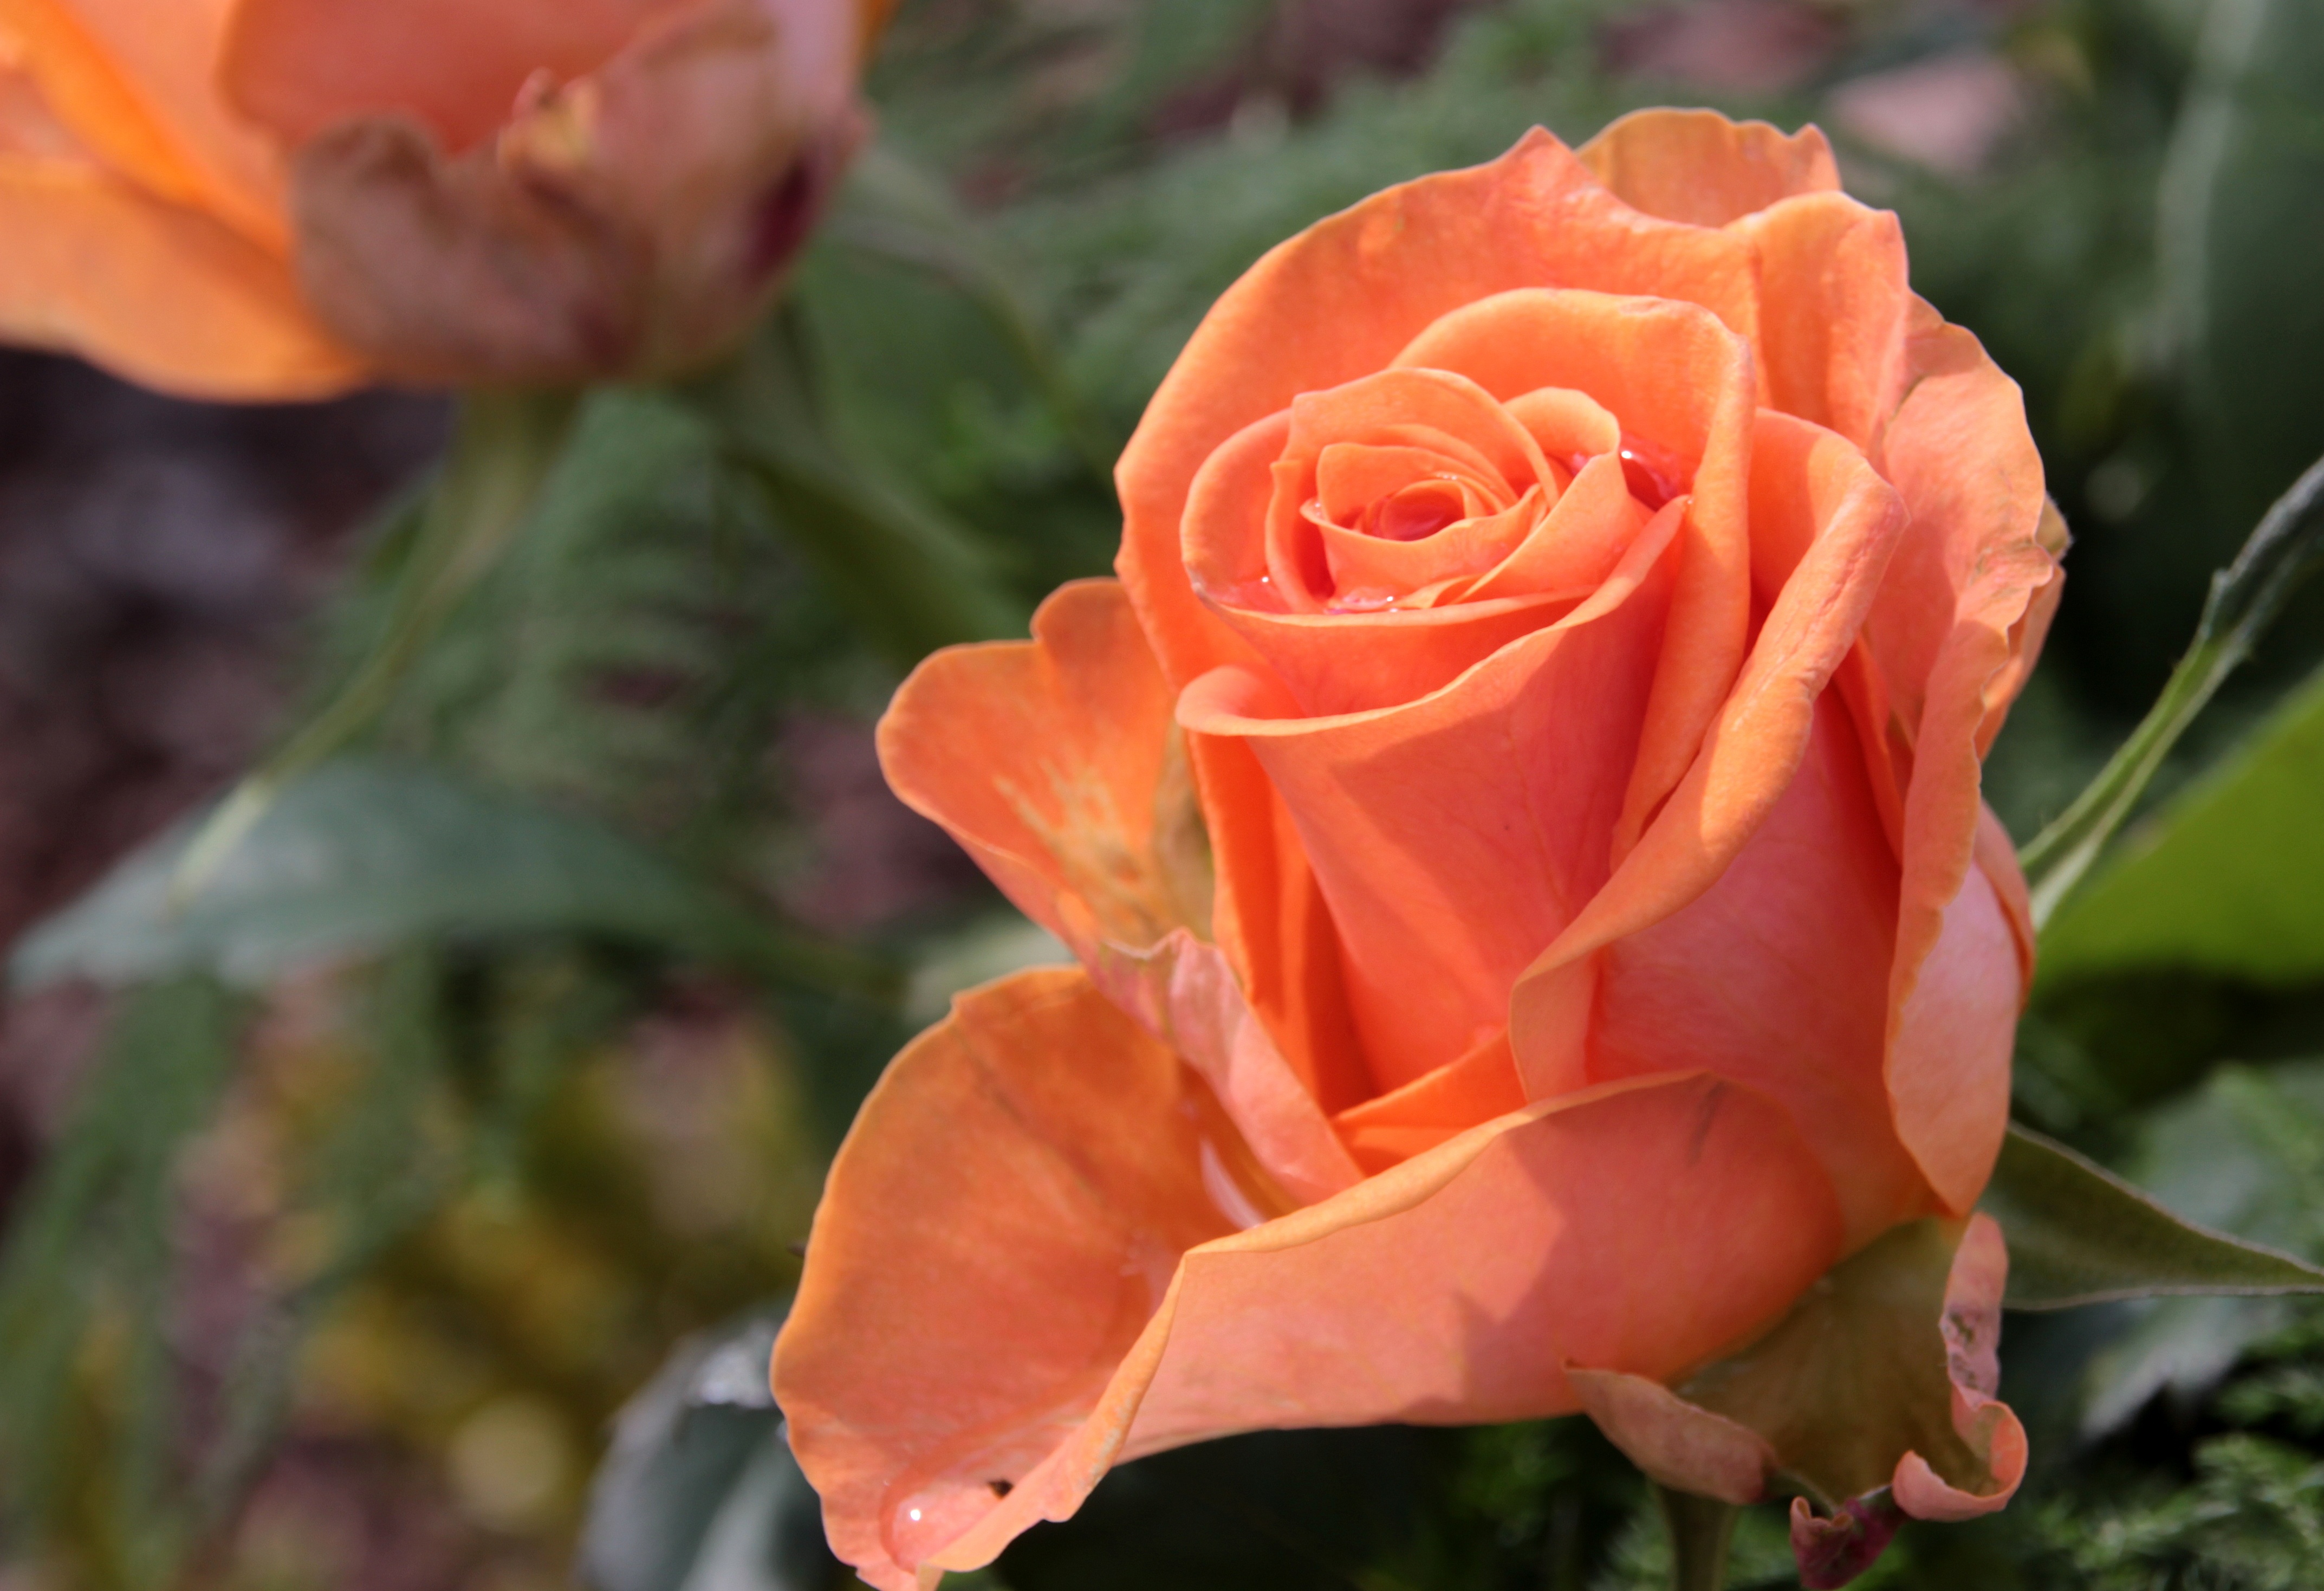 Blooming rose photo